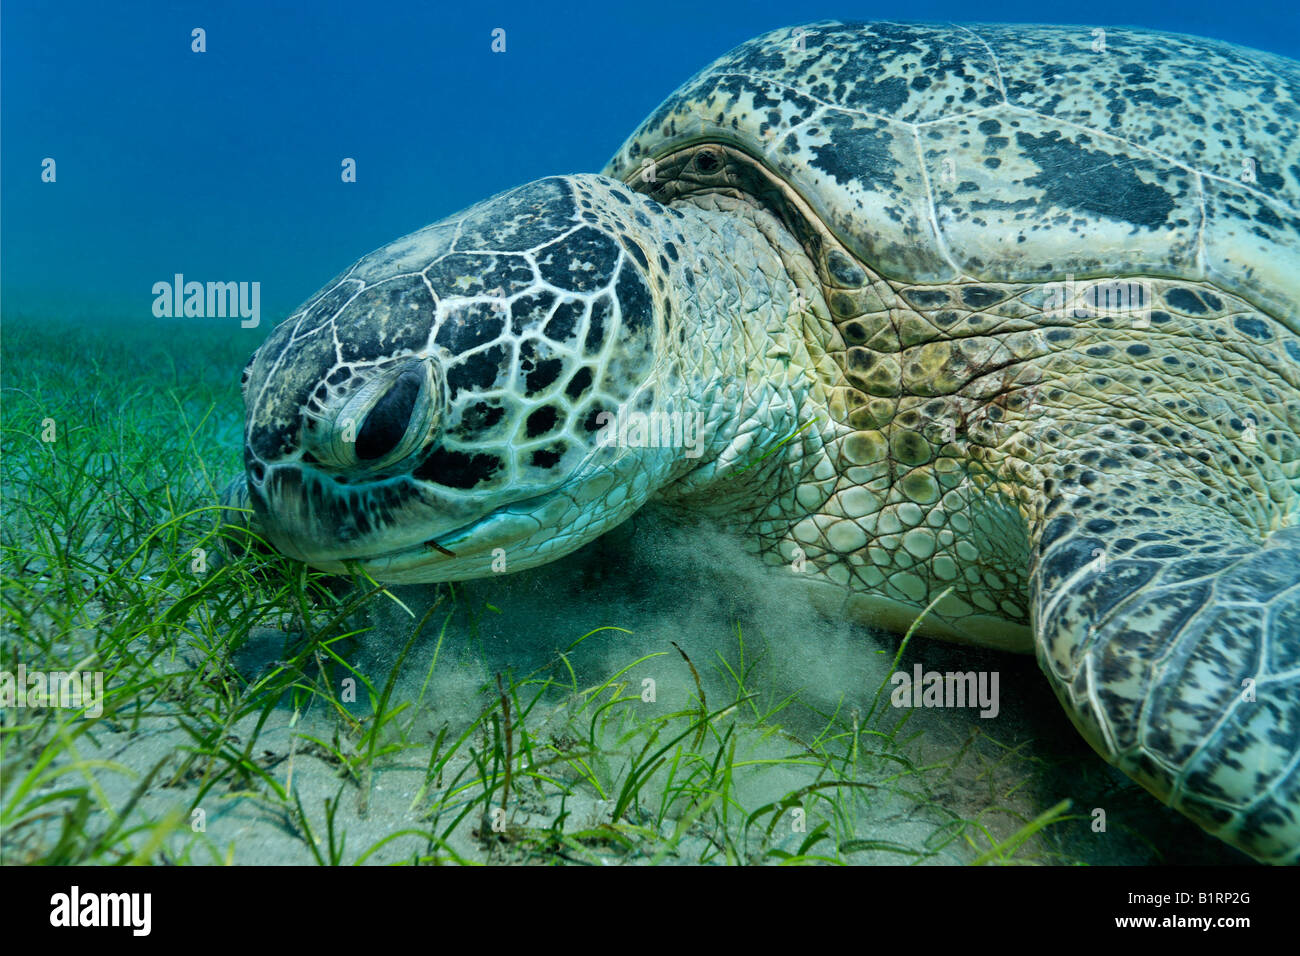 Green Sea Turtle (Chelonia mydas) feeding on seaweed, Hurghada, Red Sea, Egypt, Africa Stock Photo